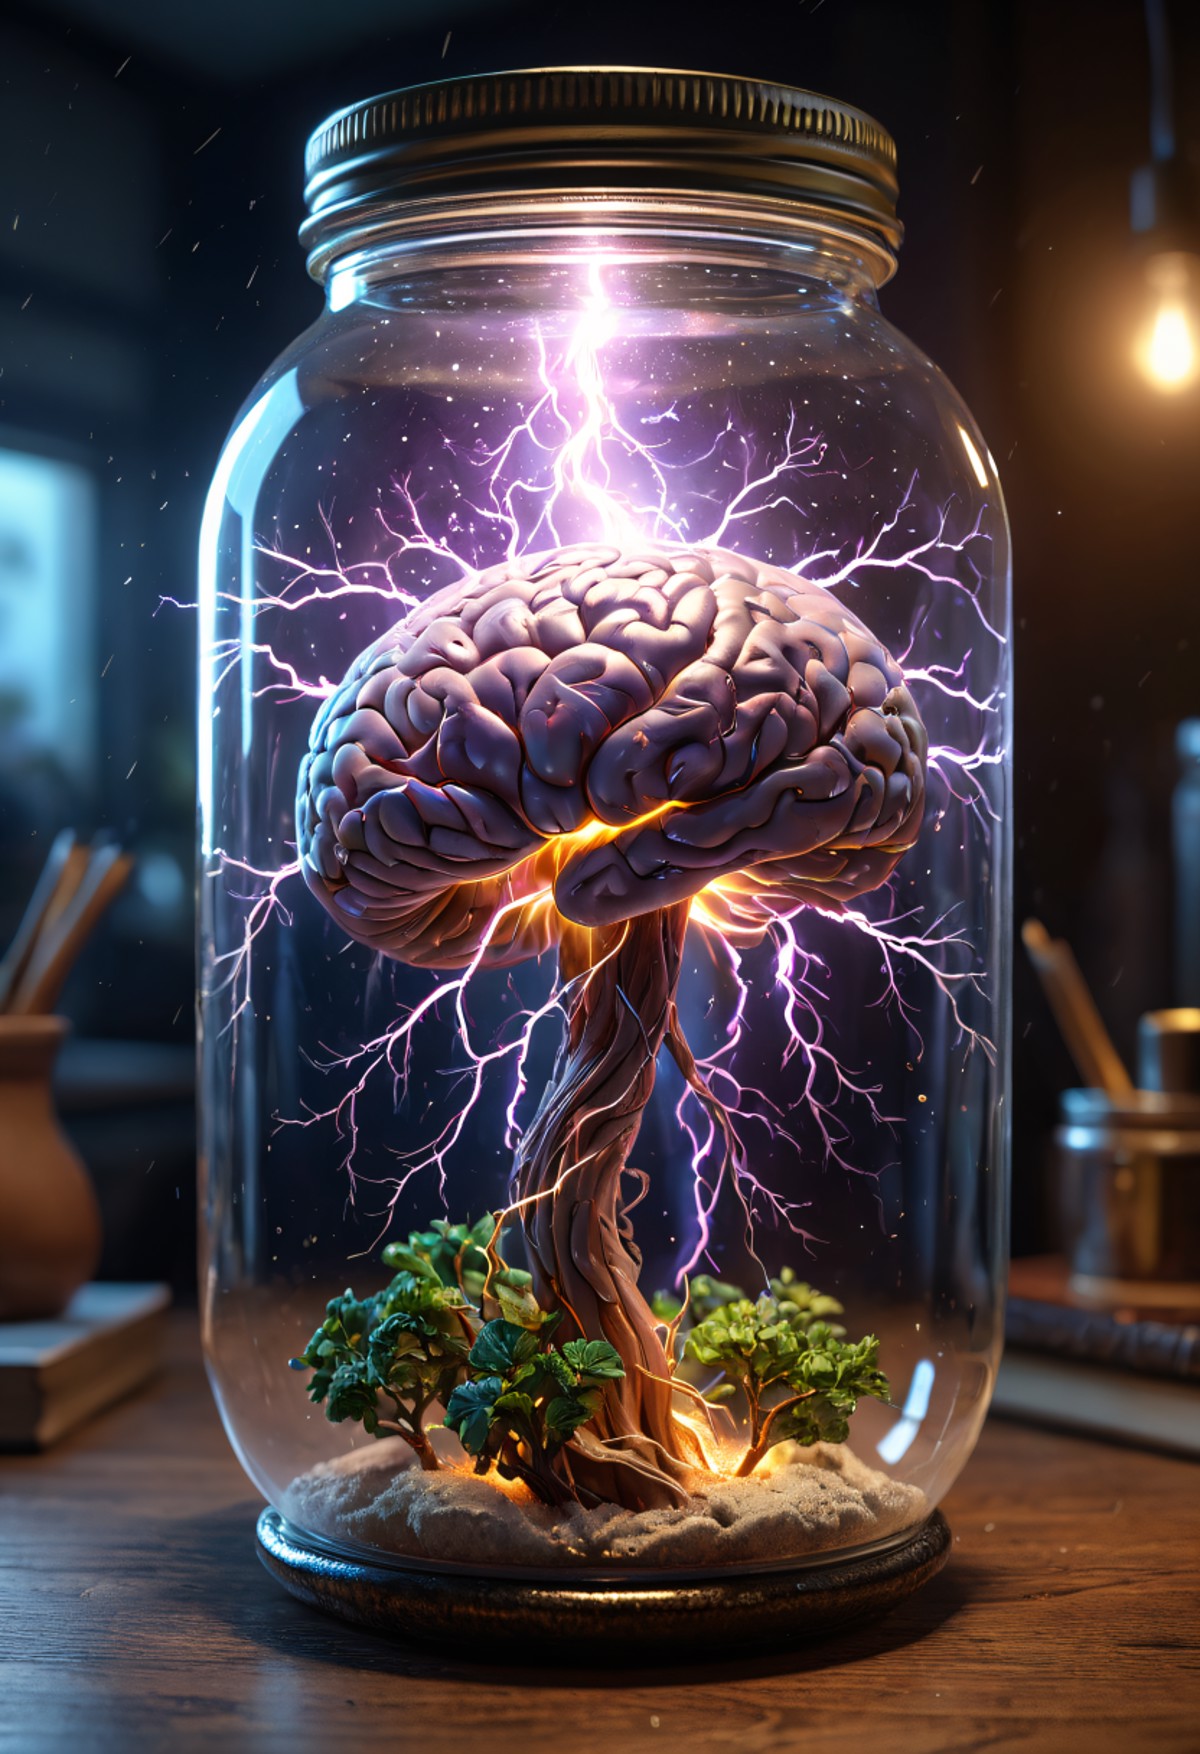 retro-futuristic (lightning storm), a human brain growing in a glass jar in a workshop, jar full of a dull transluscent li...